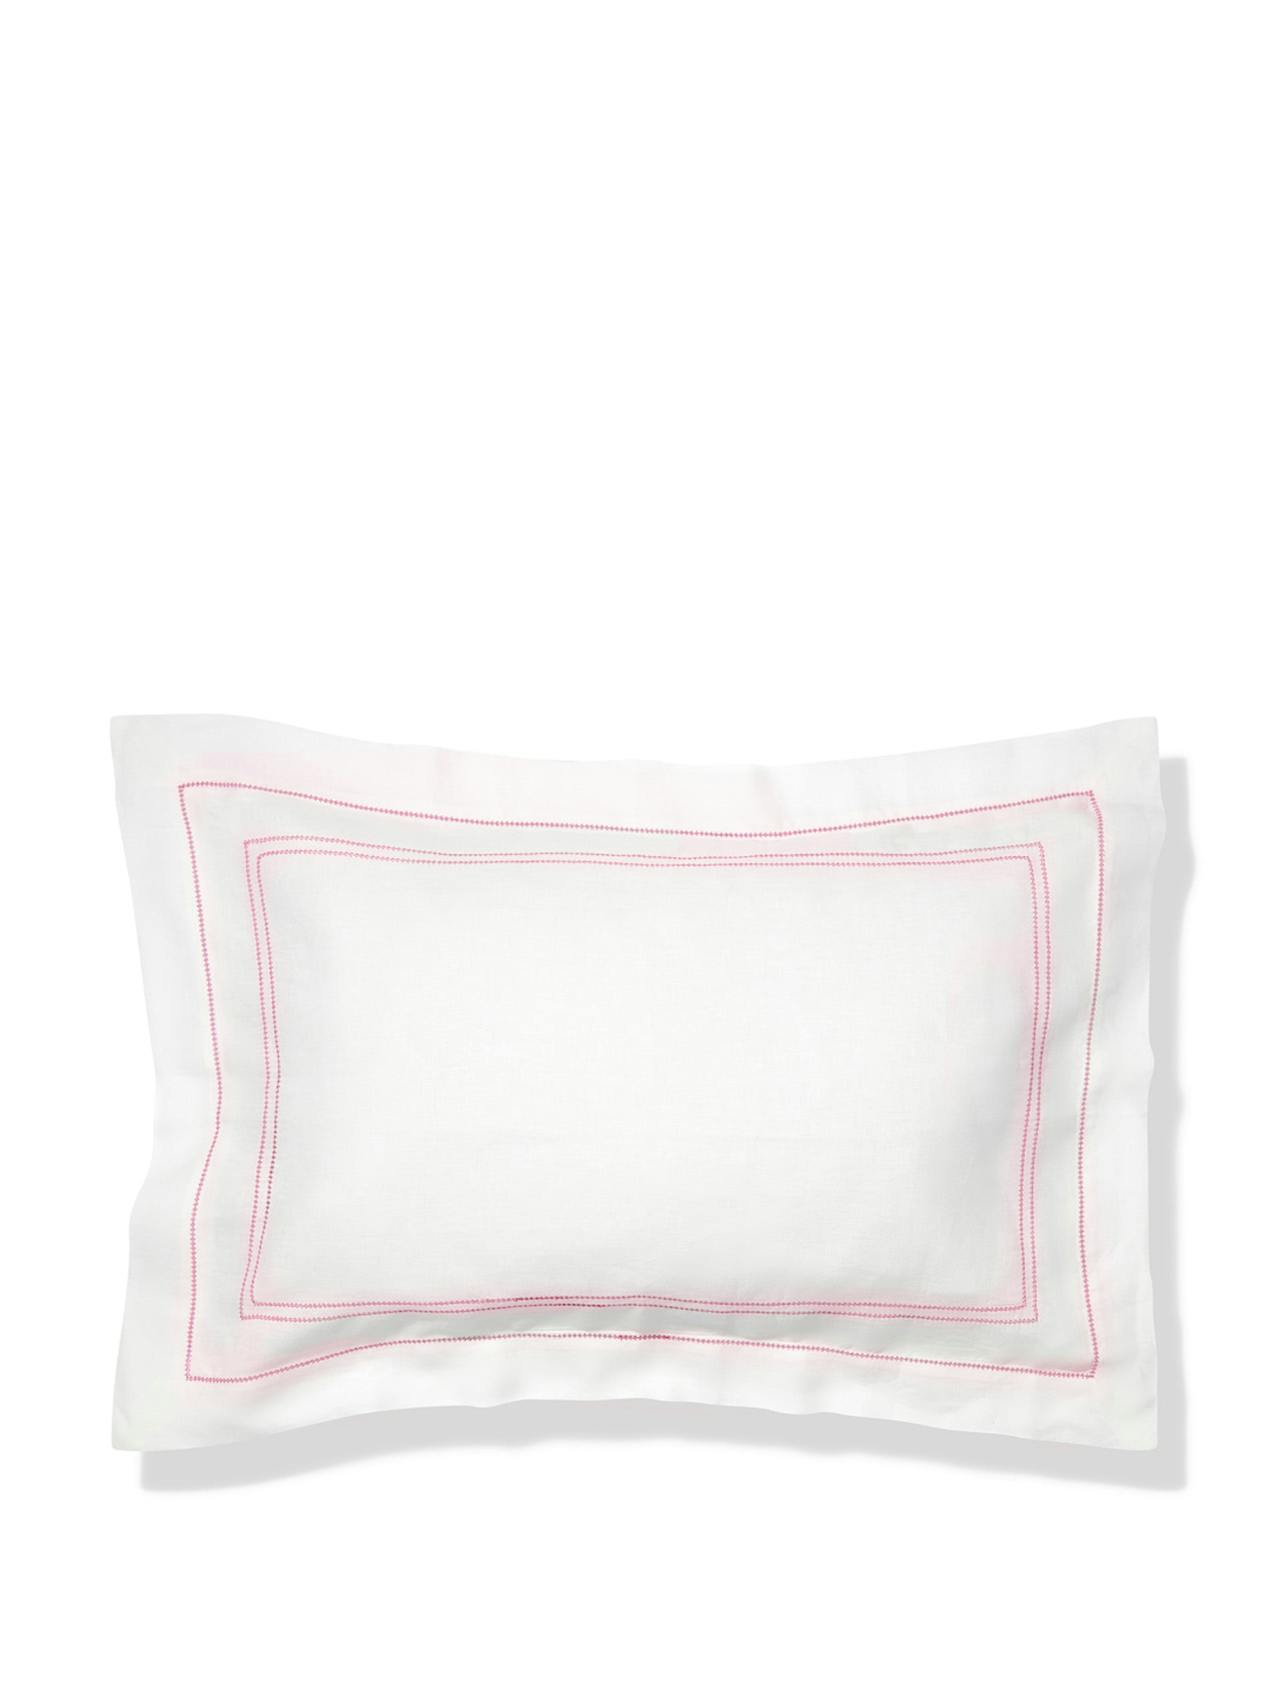 Pink hemstitch pillowcase